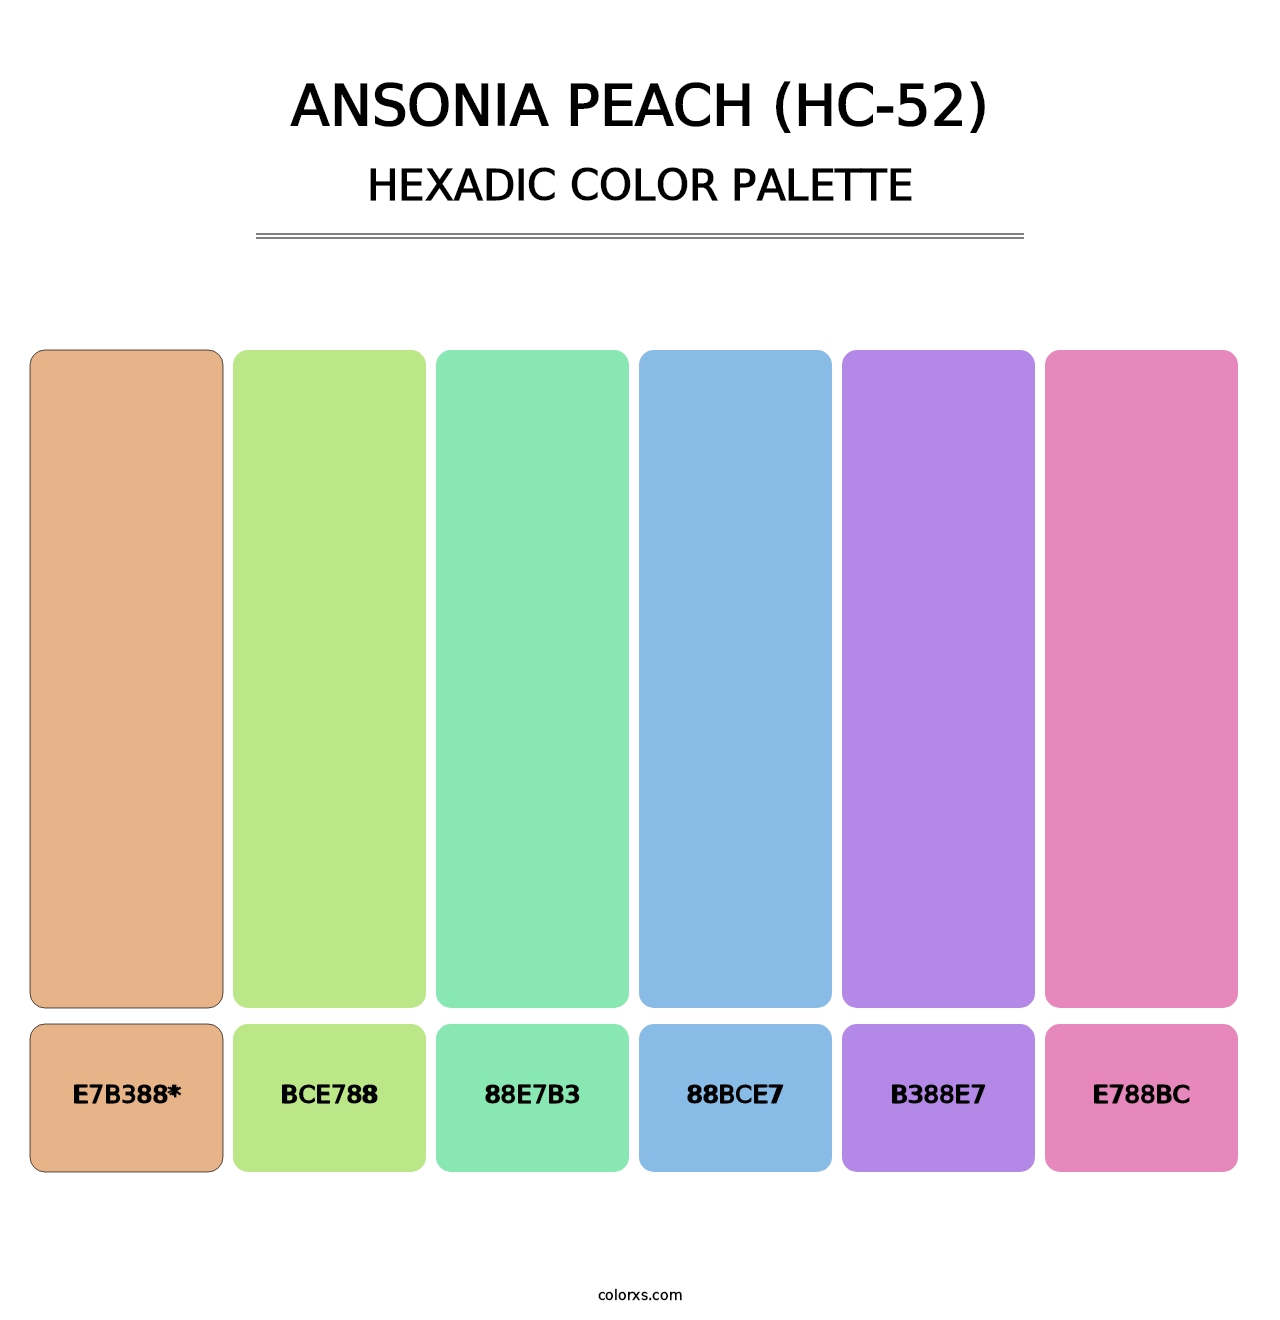 Ansonia Peach (HC-52) - Hexadic Color Palette